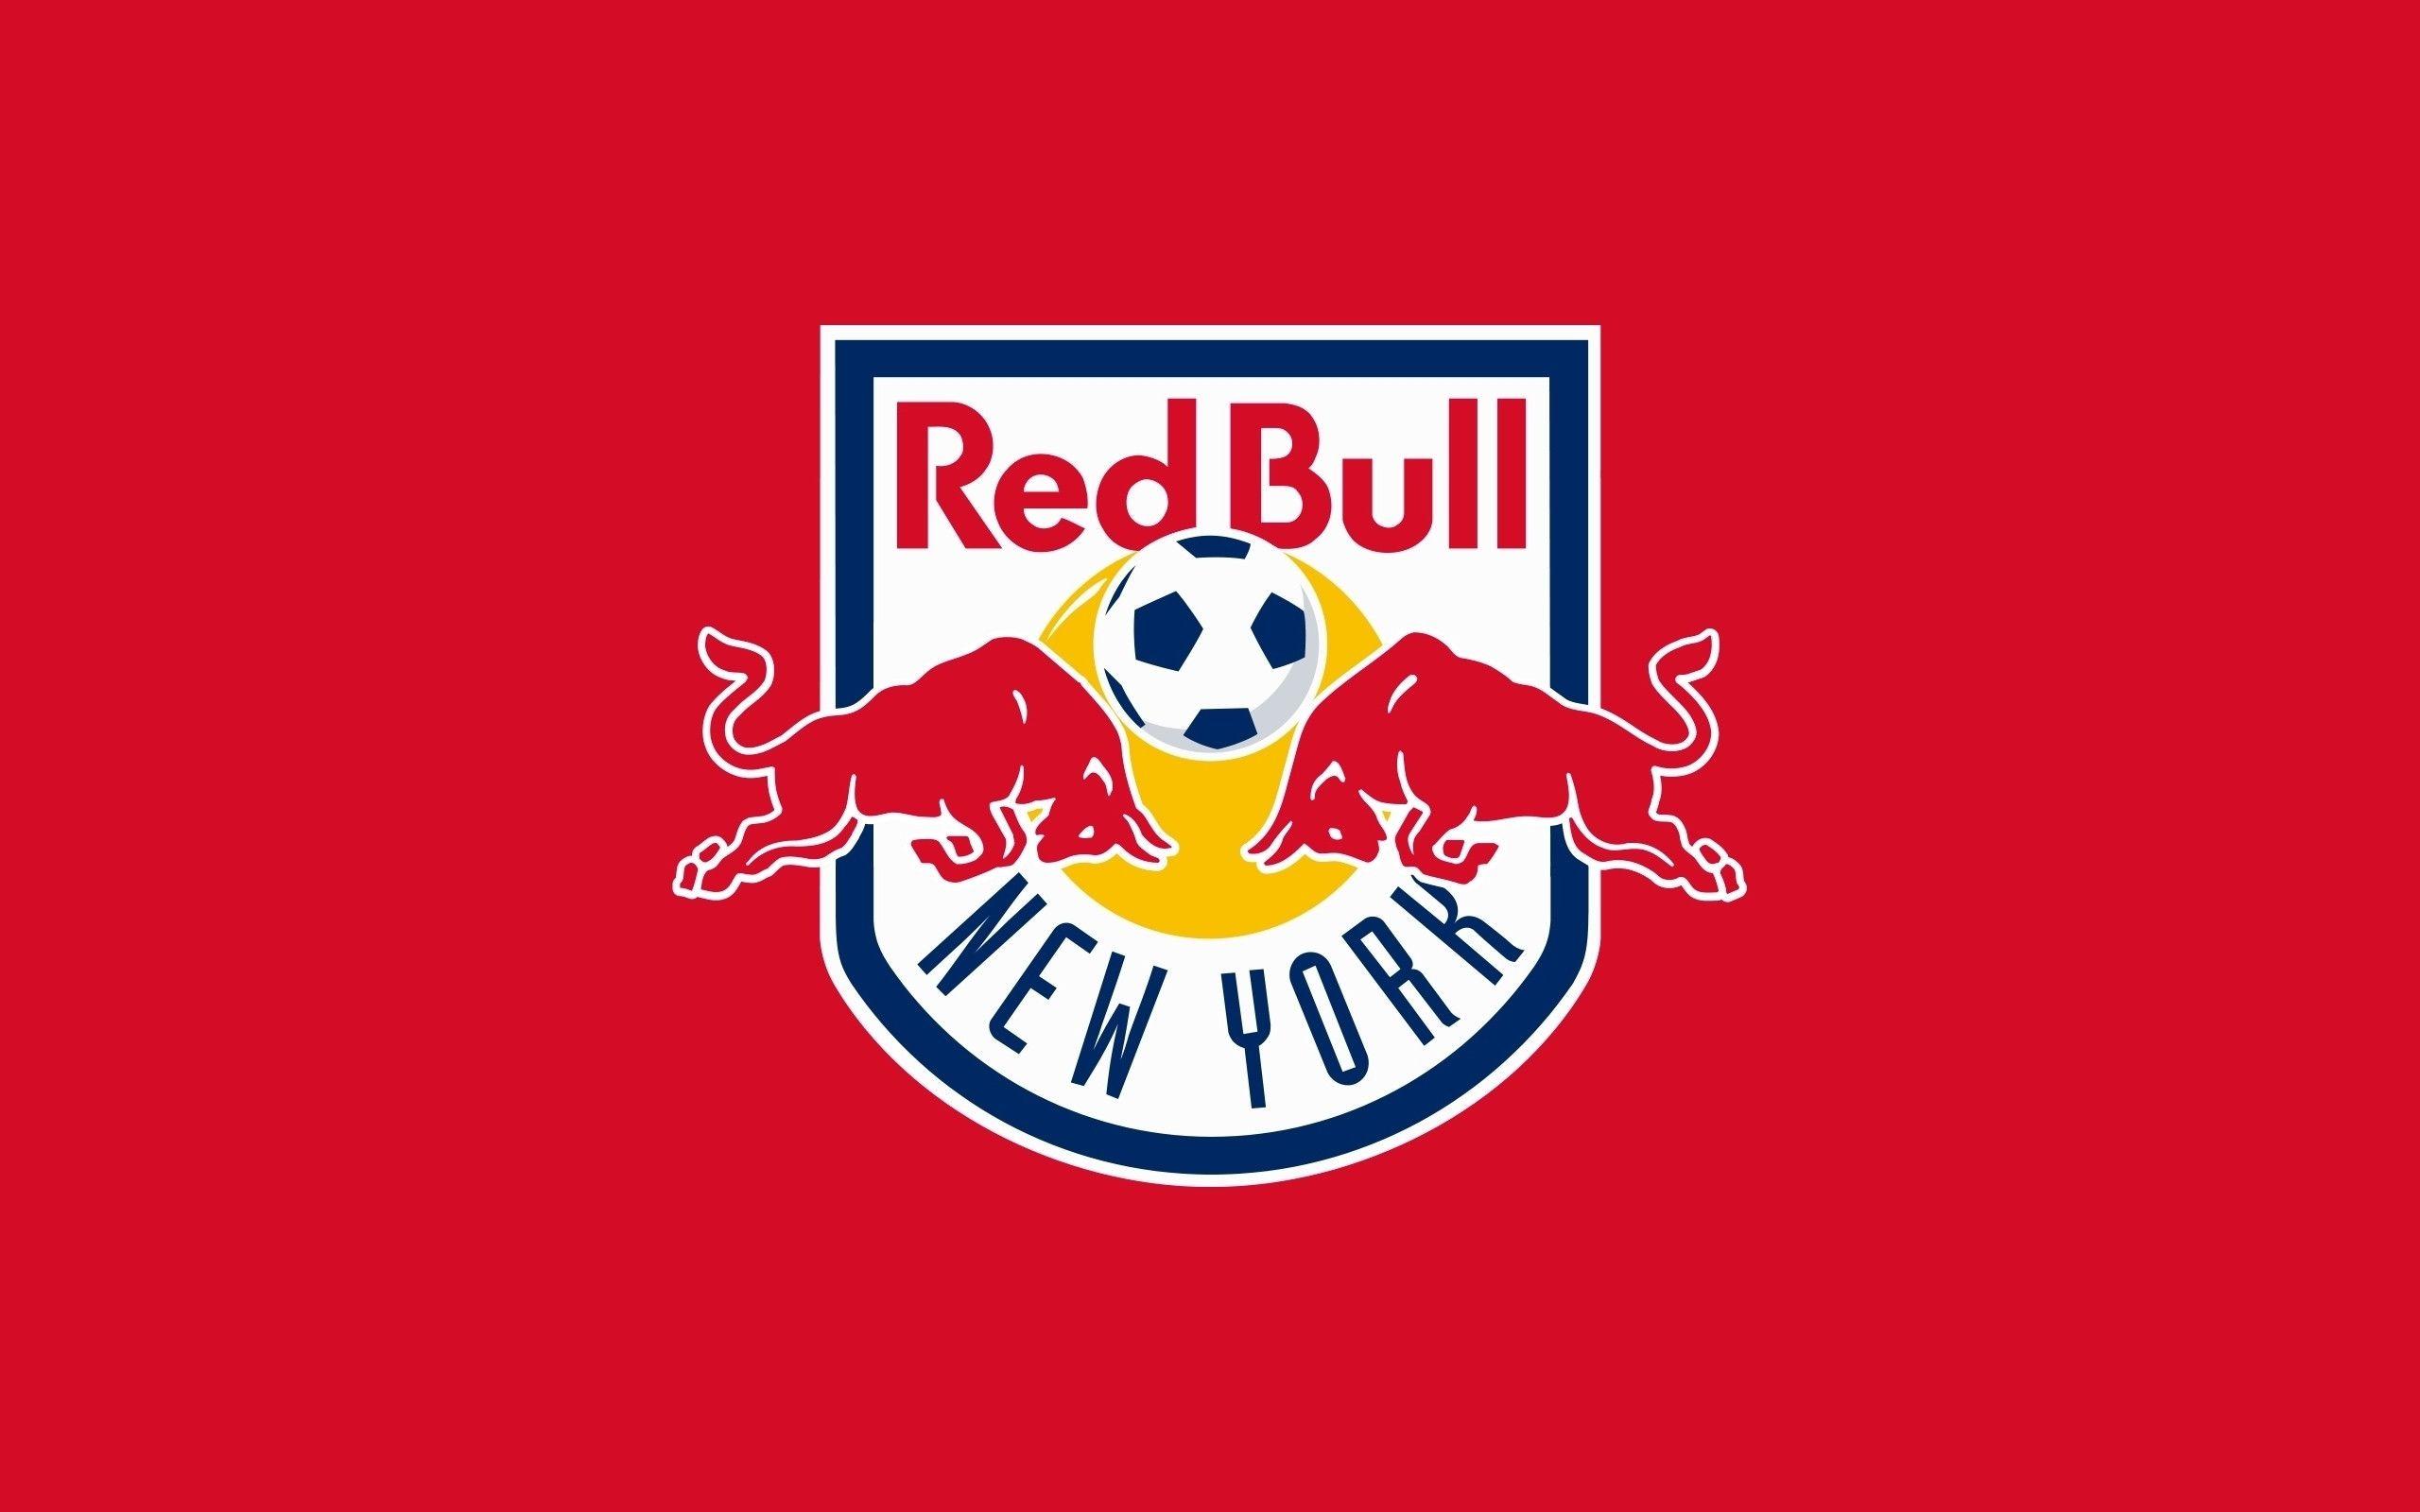 New York Red Bulls Wallpaper